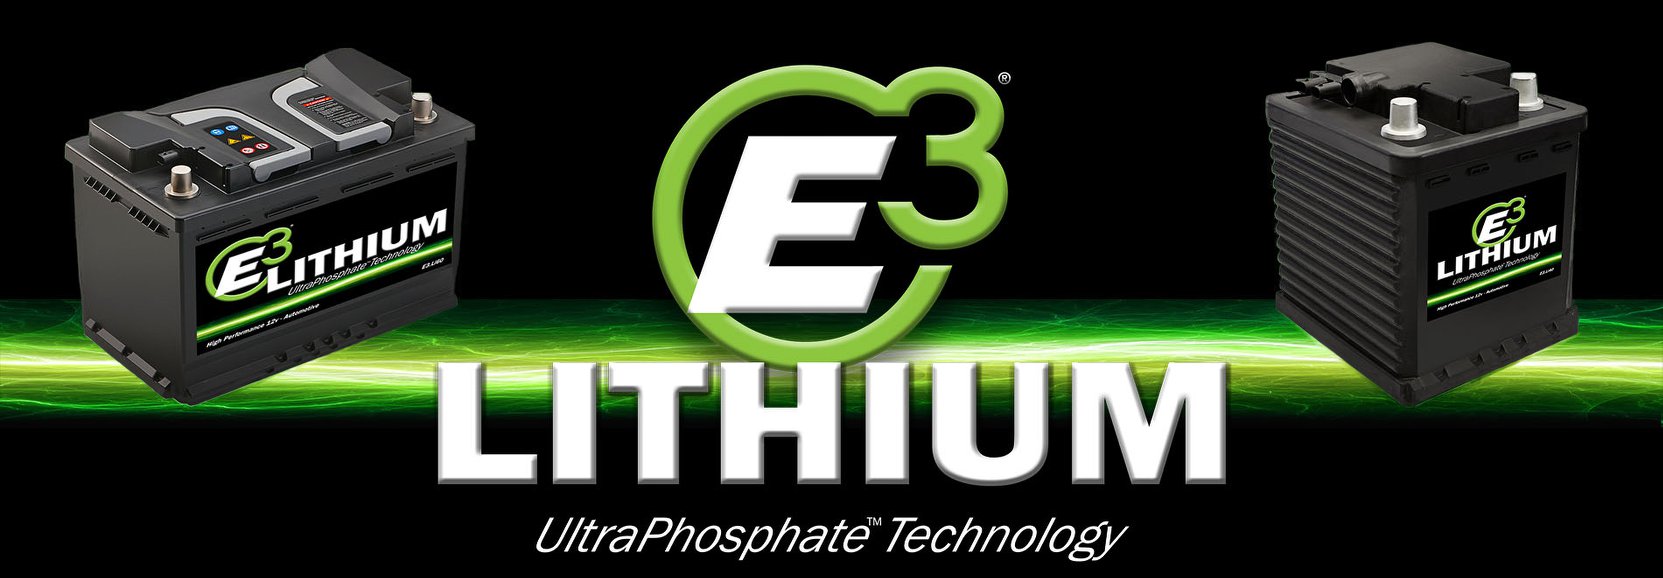 E3 Lithium High Performance 12-volt automotive battery at SEMA 2019